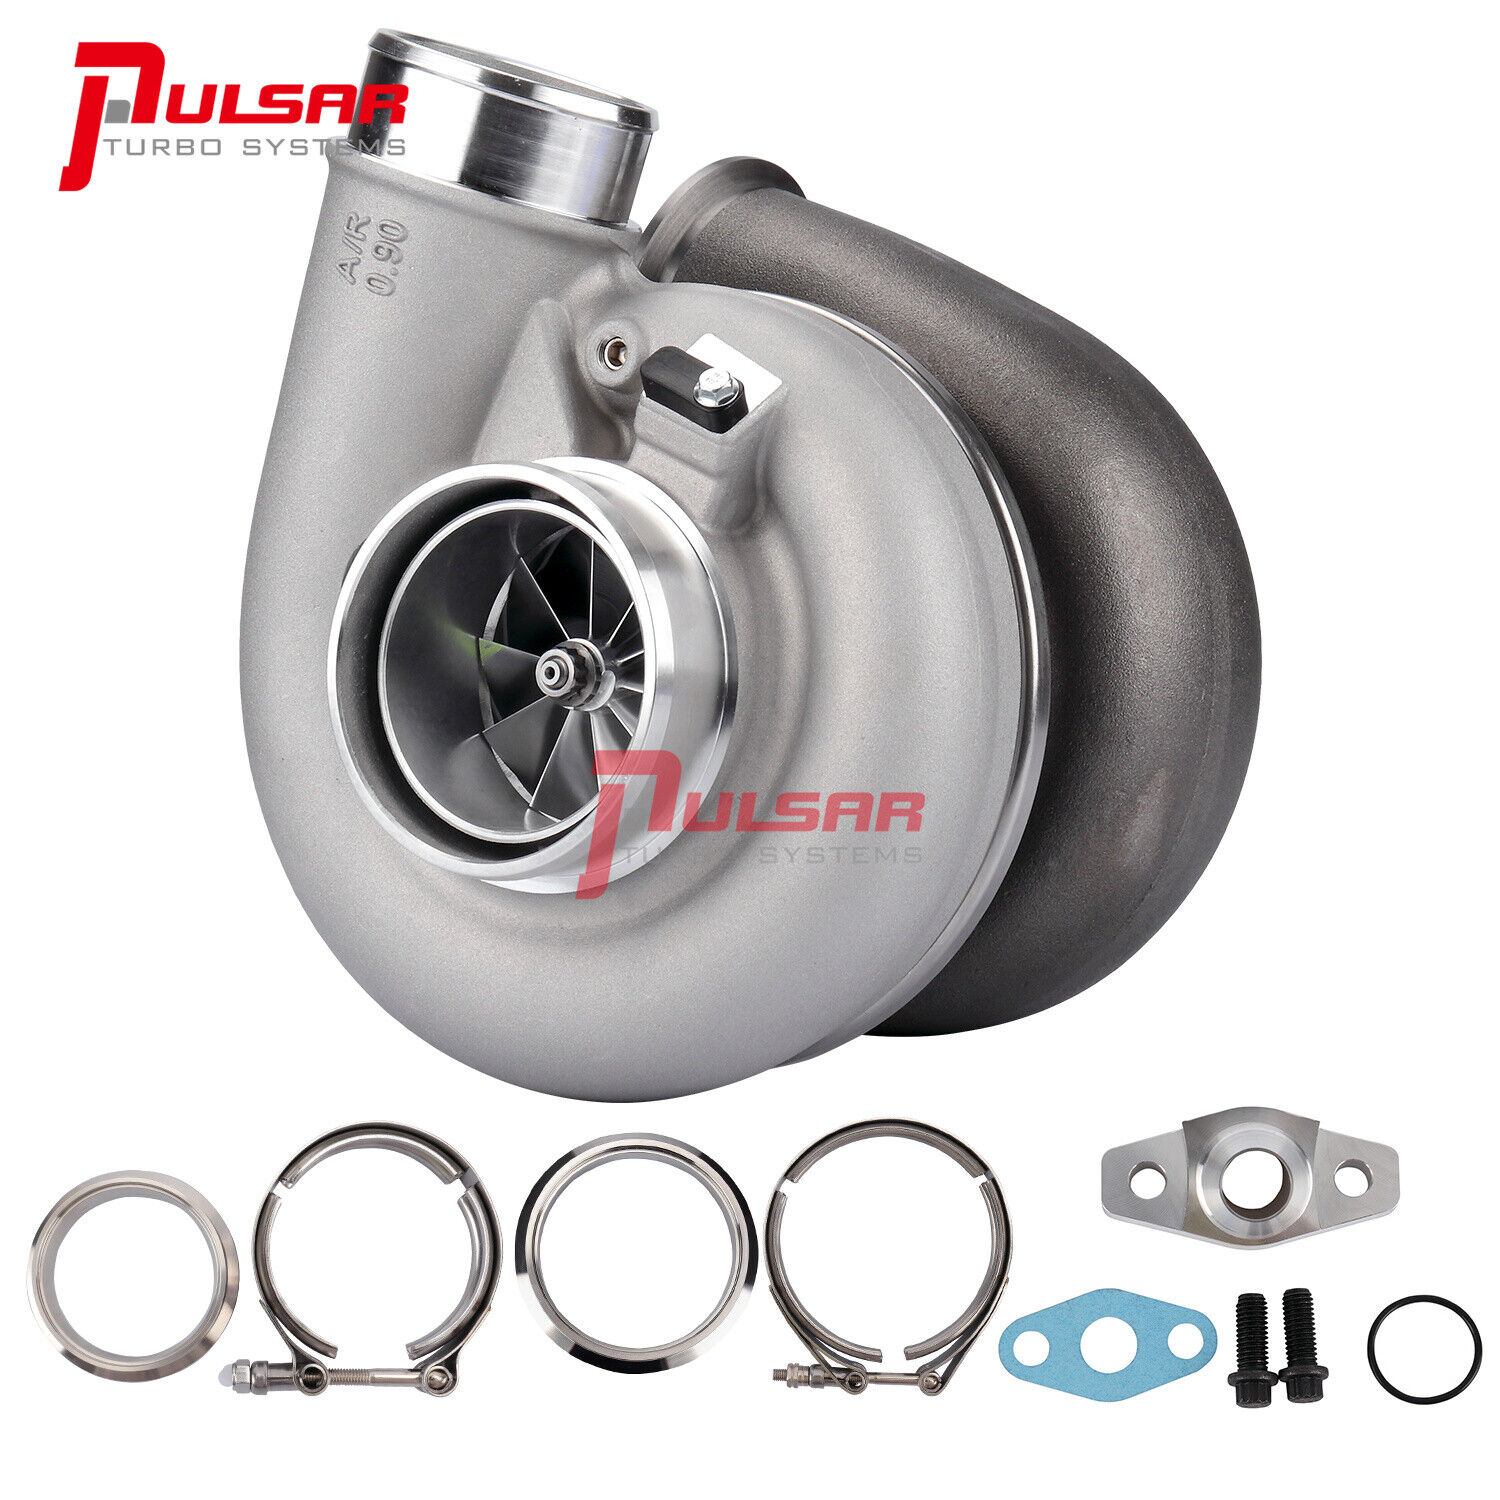 Pulsar 7975G COMPACT Ball Bearing Turbo Billet Compressor Wheel Vband 1.28A/R